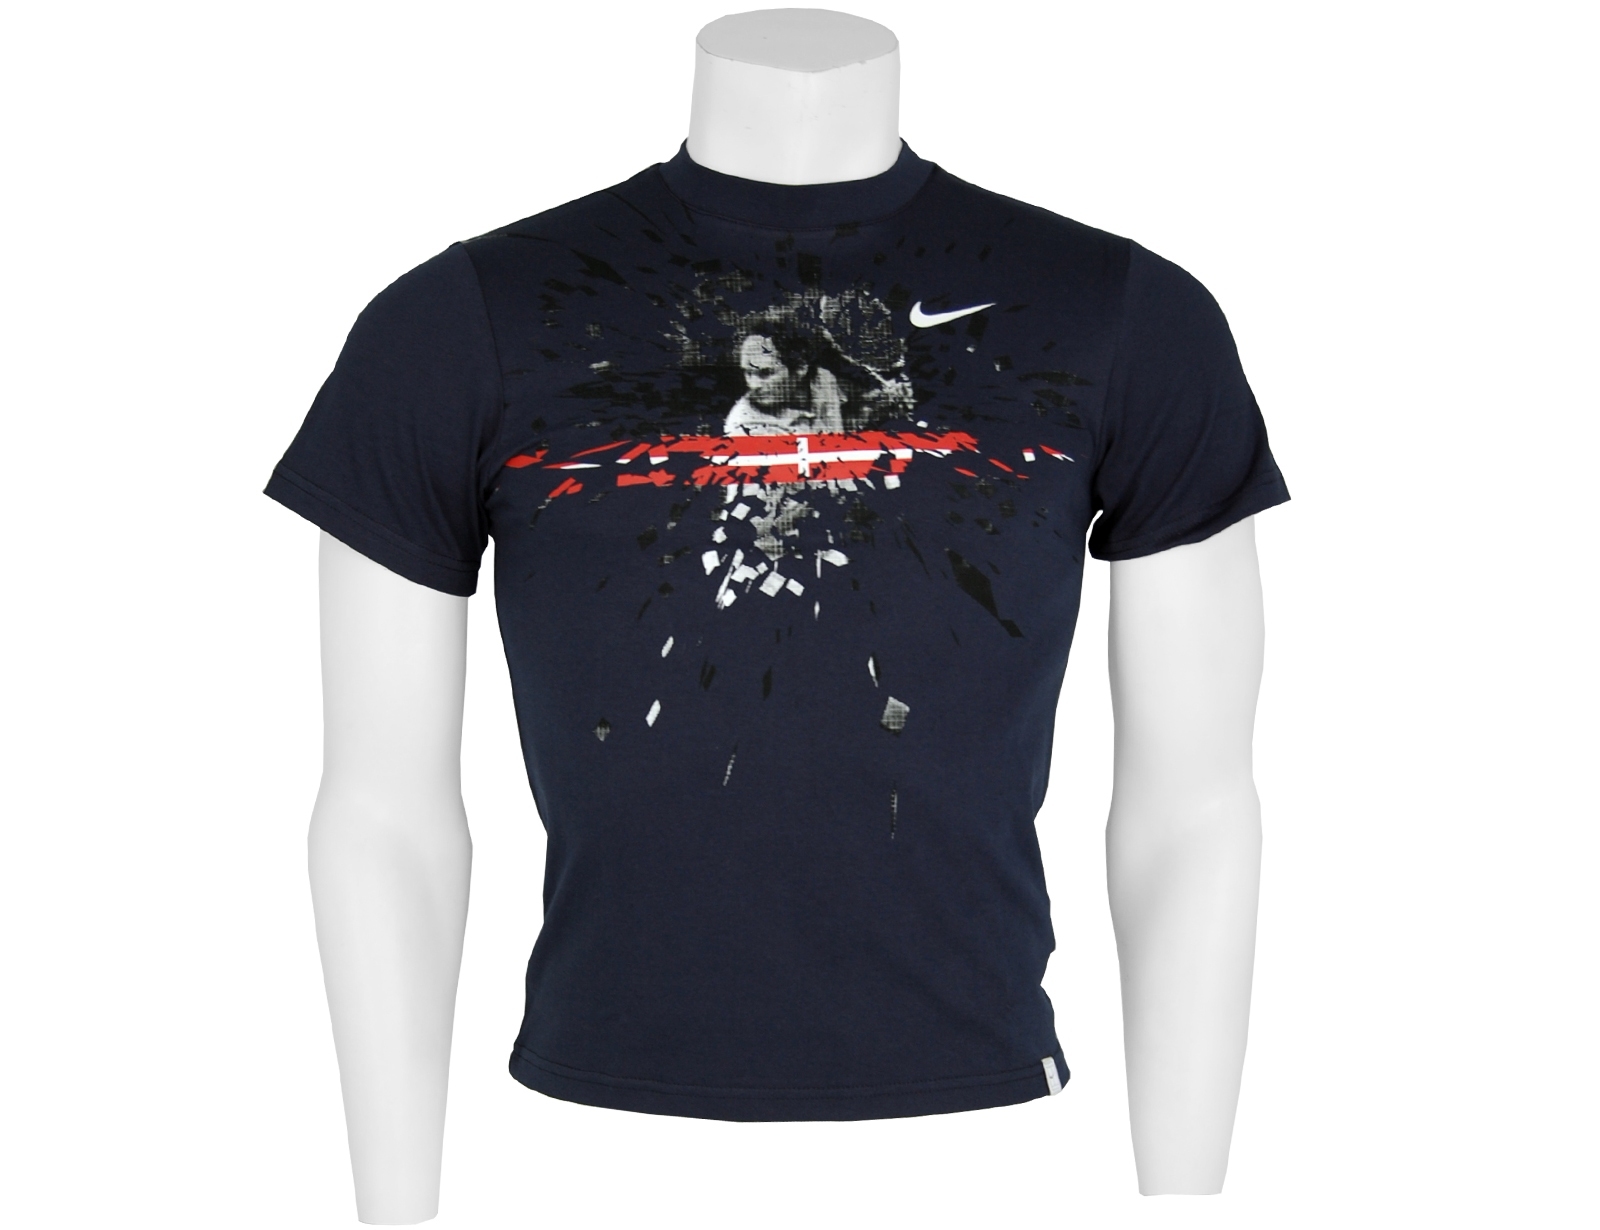 Avantisport - Nike - Tennis Graphic Tee Boys - Navy/black/white/red